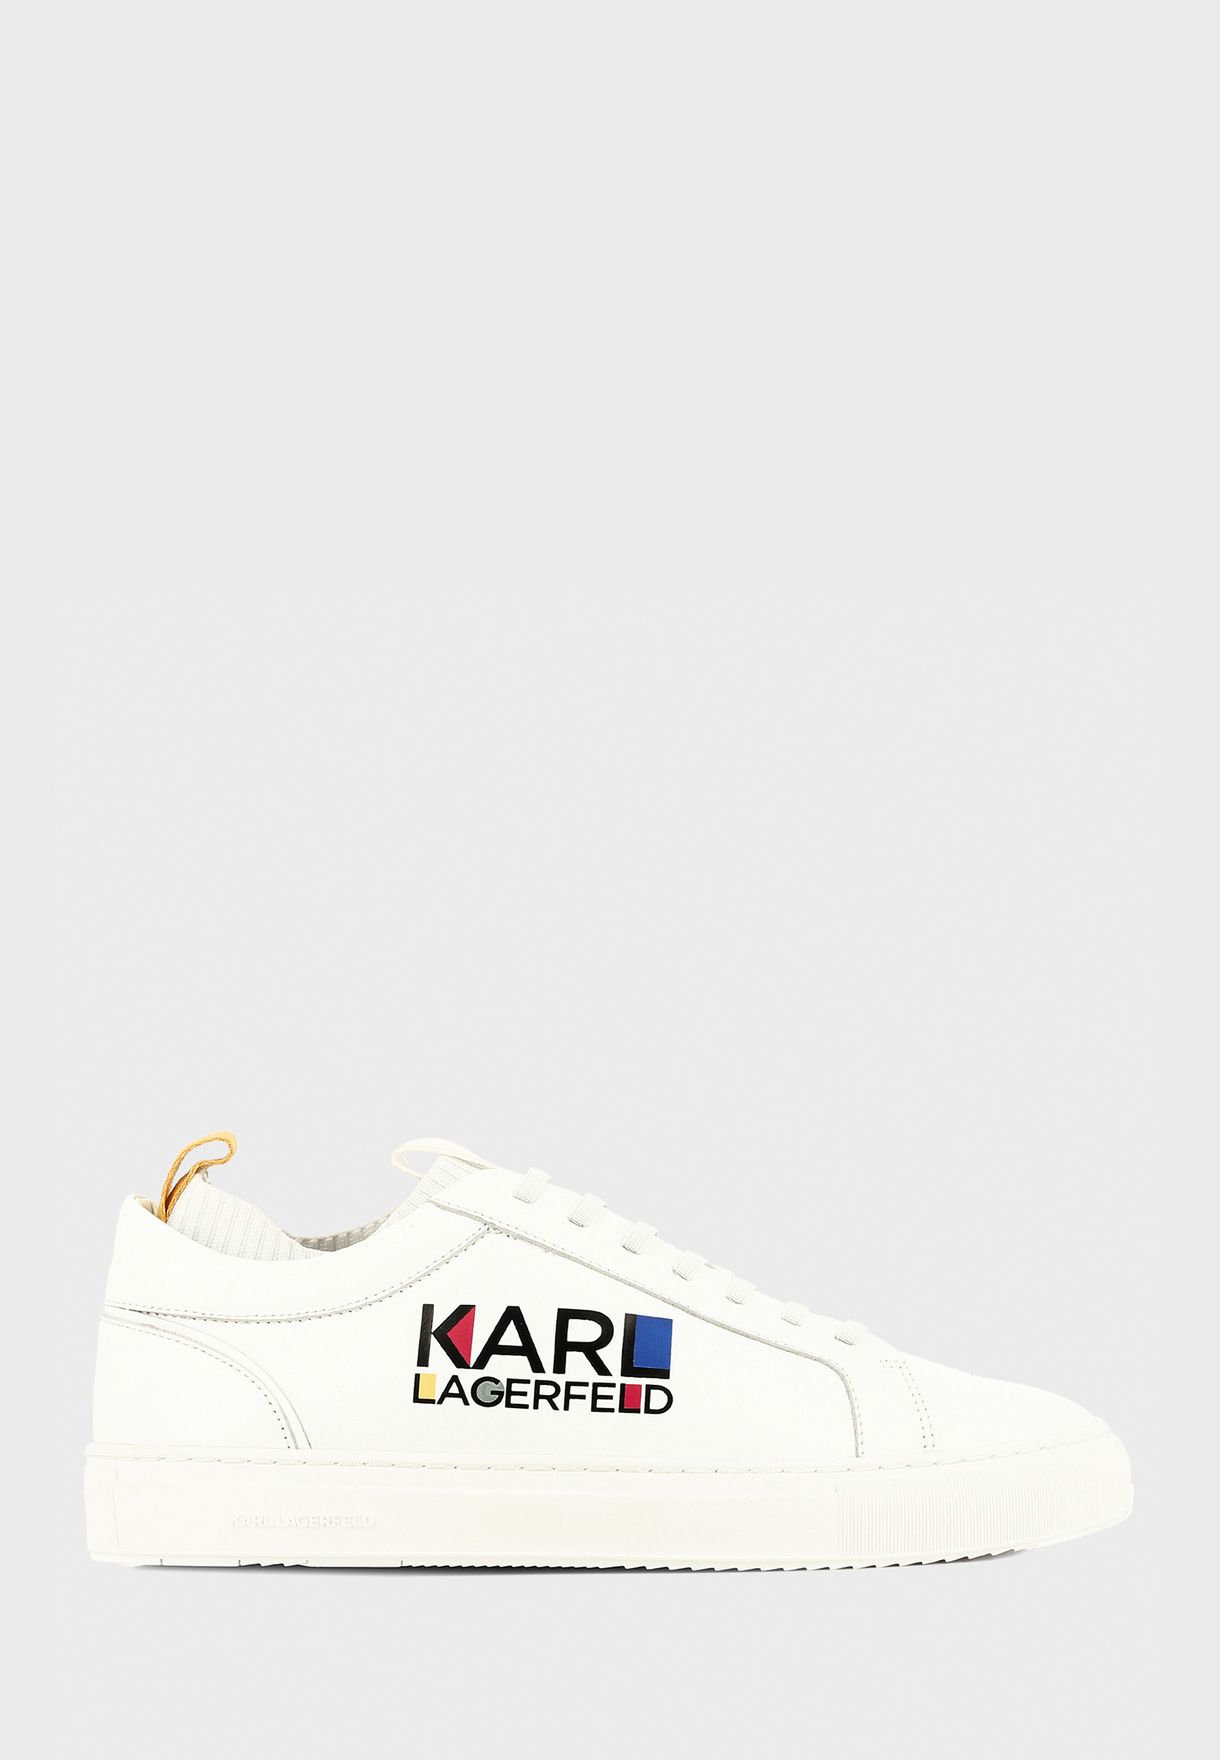 karl lagerfeld shoes for men